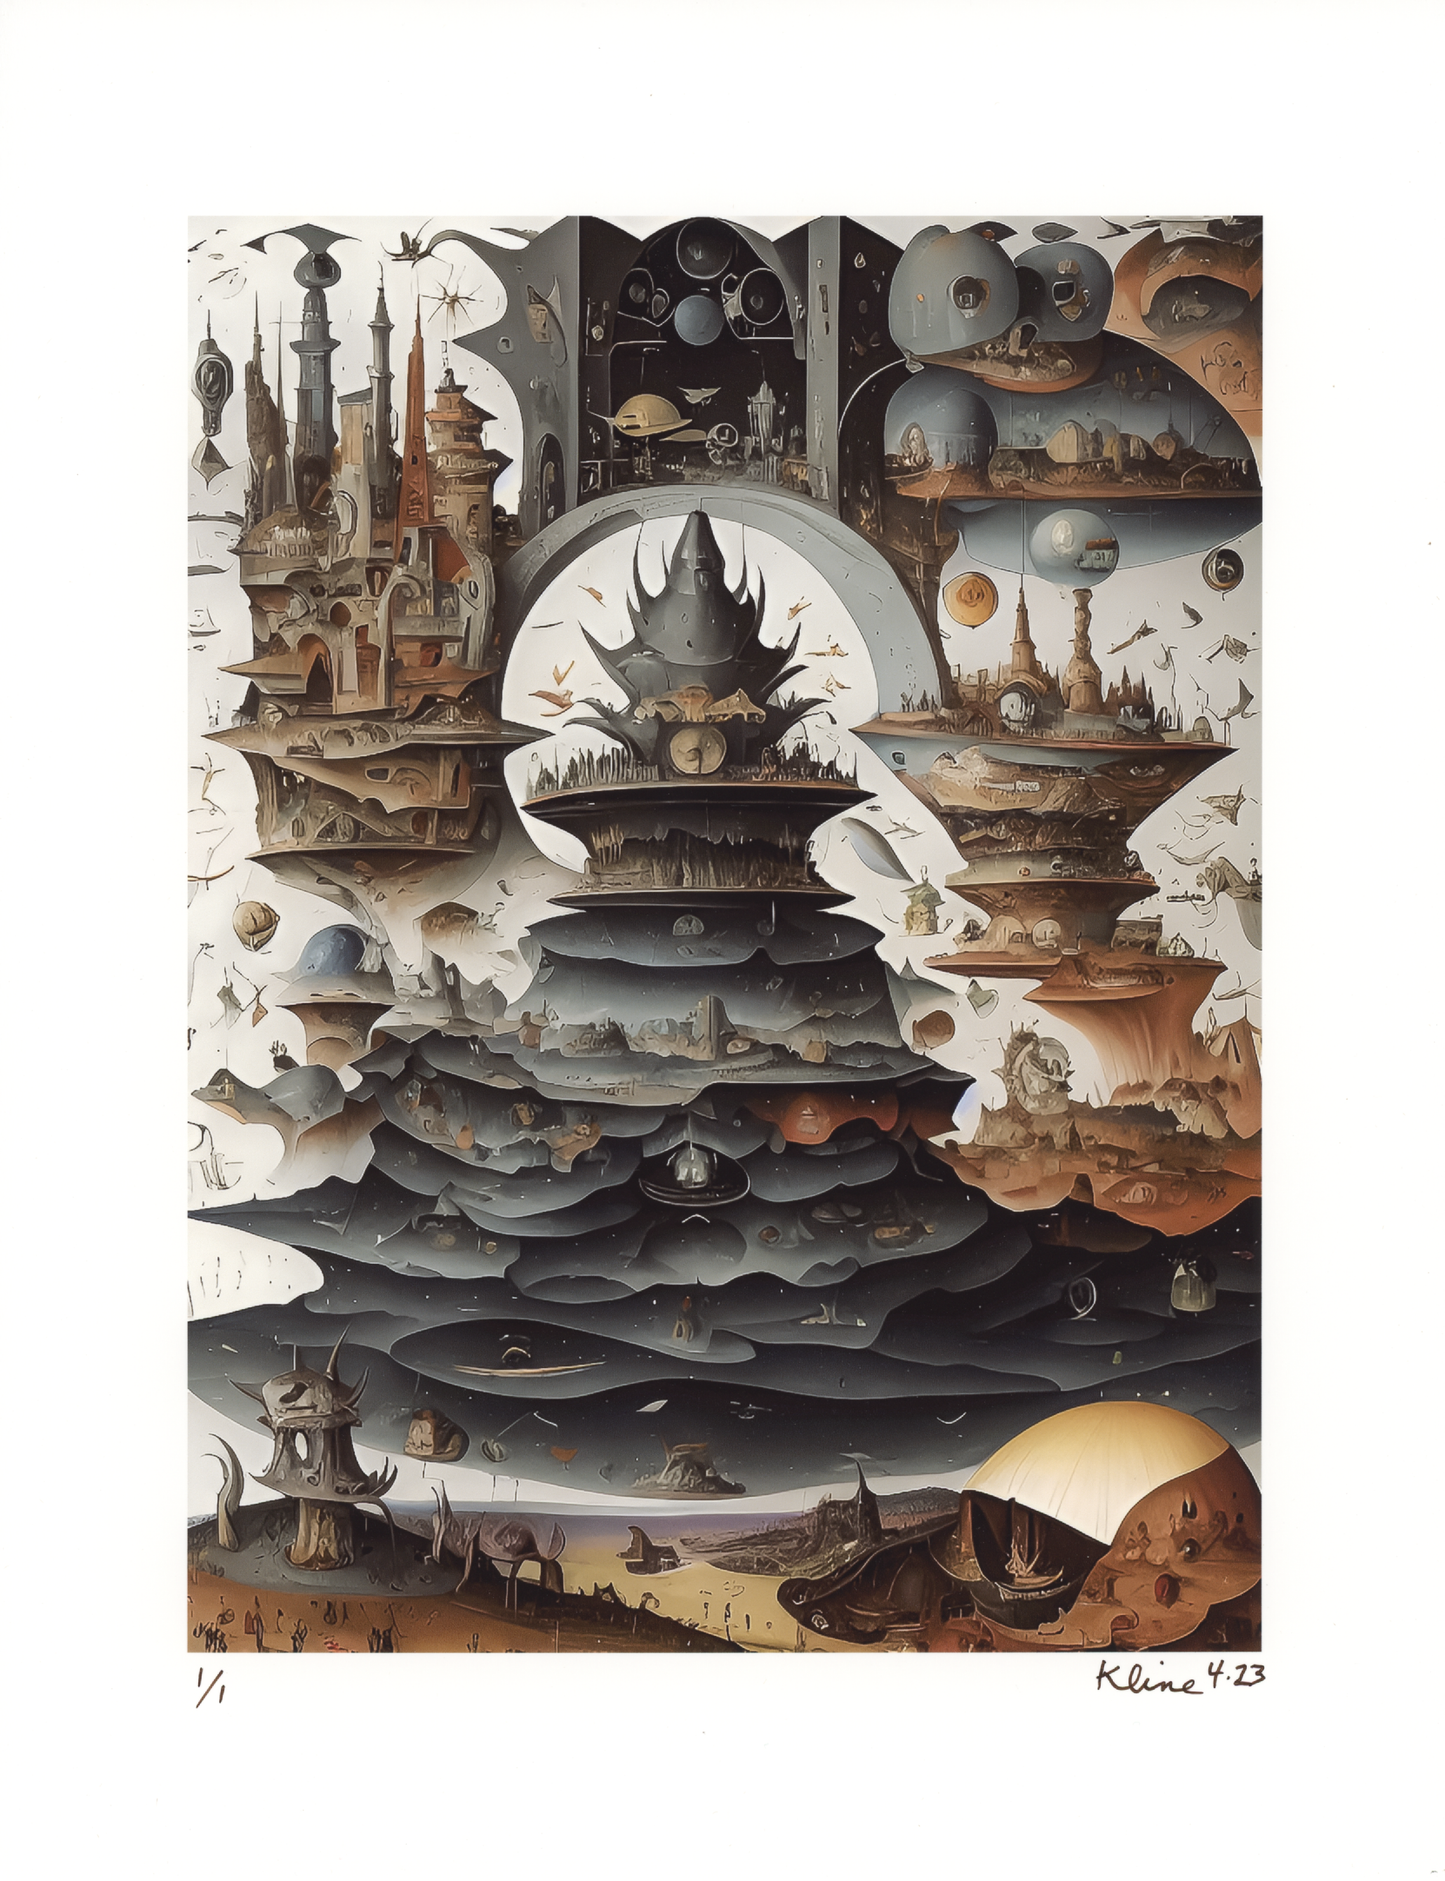 Sci-Fi Brueghel. Digital Art Print. 8.5" x 11". 1/1 Edition. John Kline Artwork